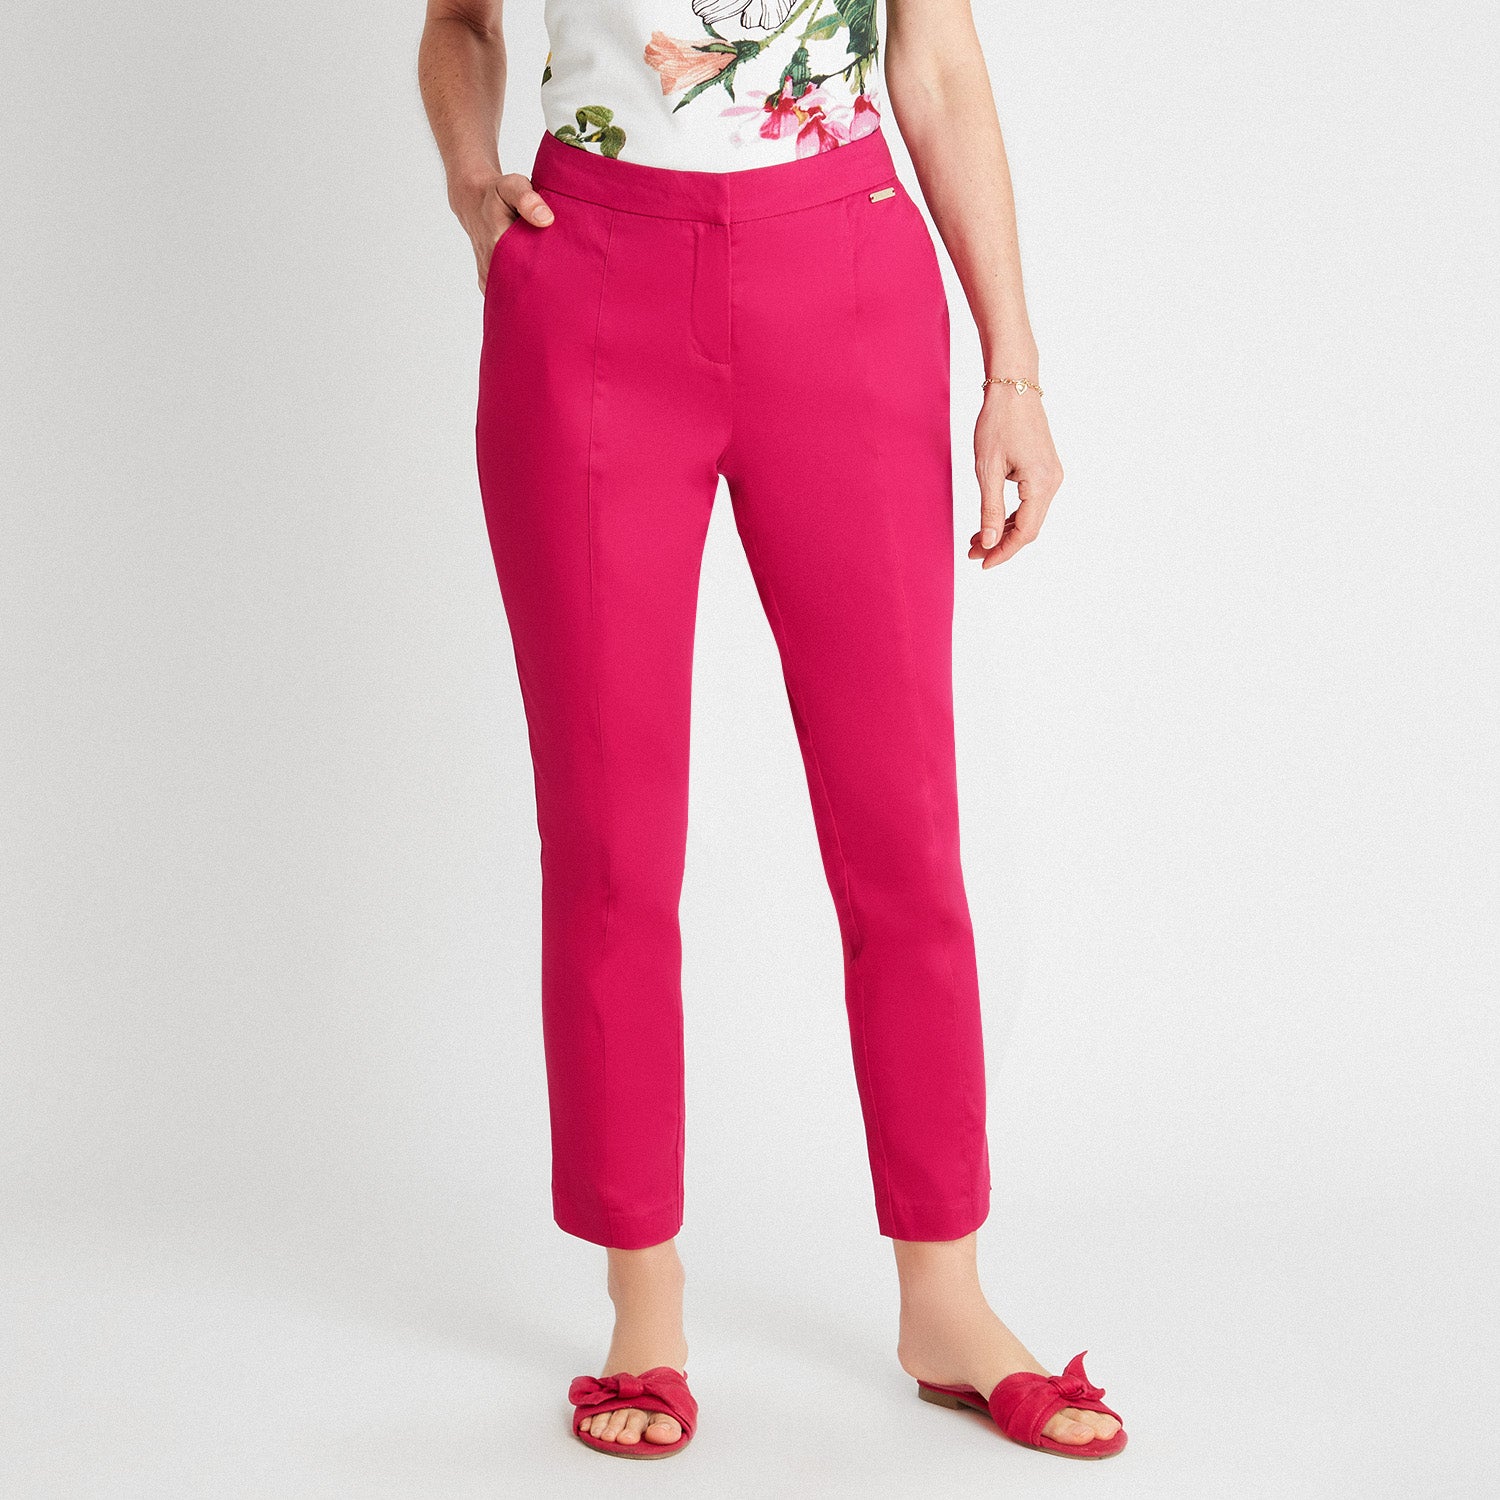 Tiffany - Pantalon Bengalina Estampado